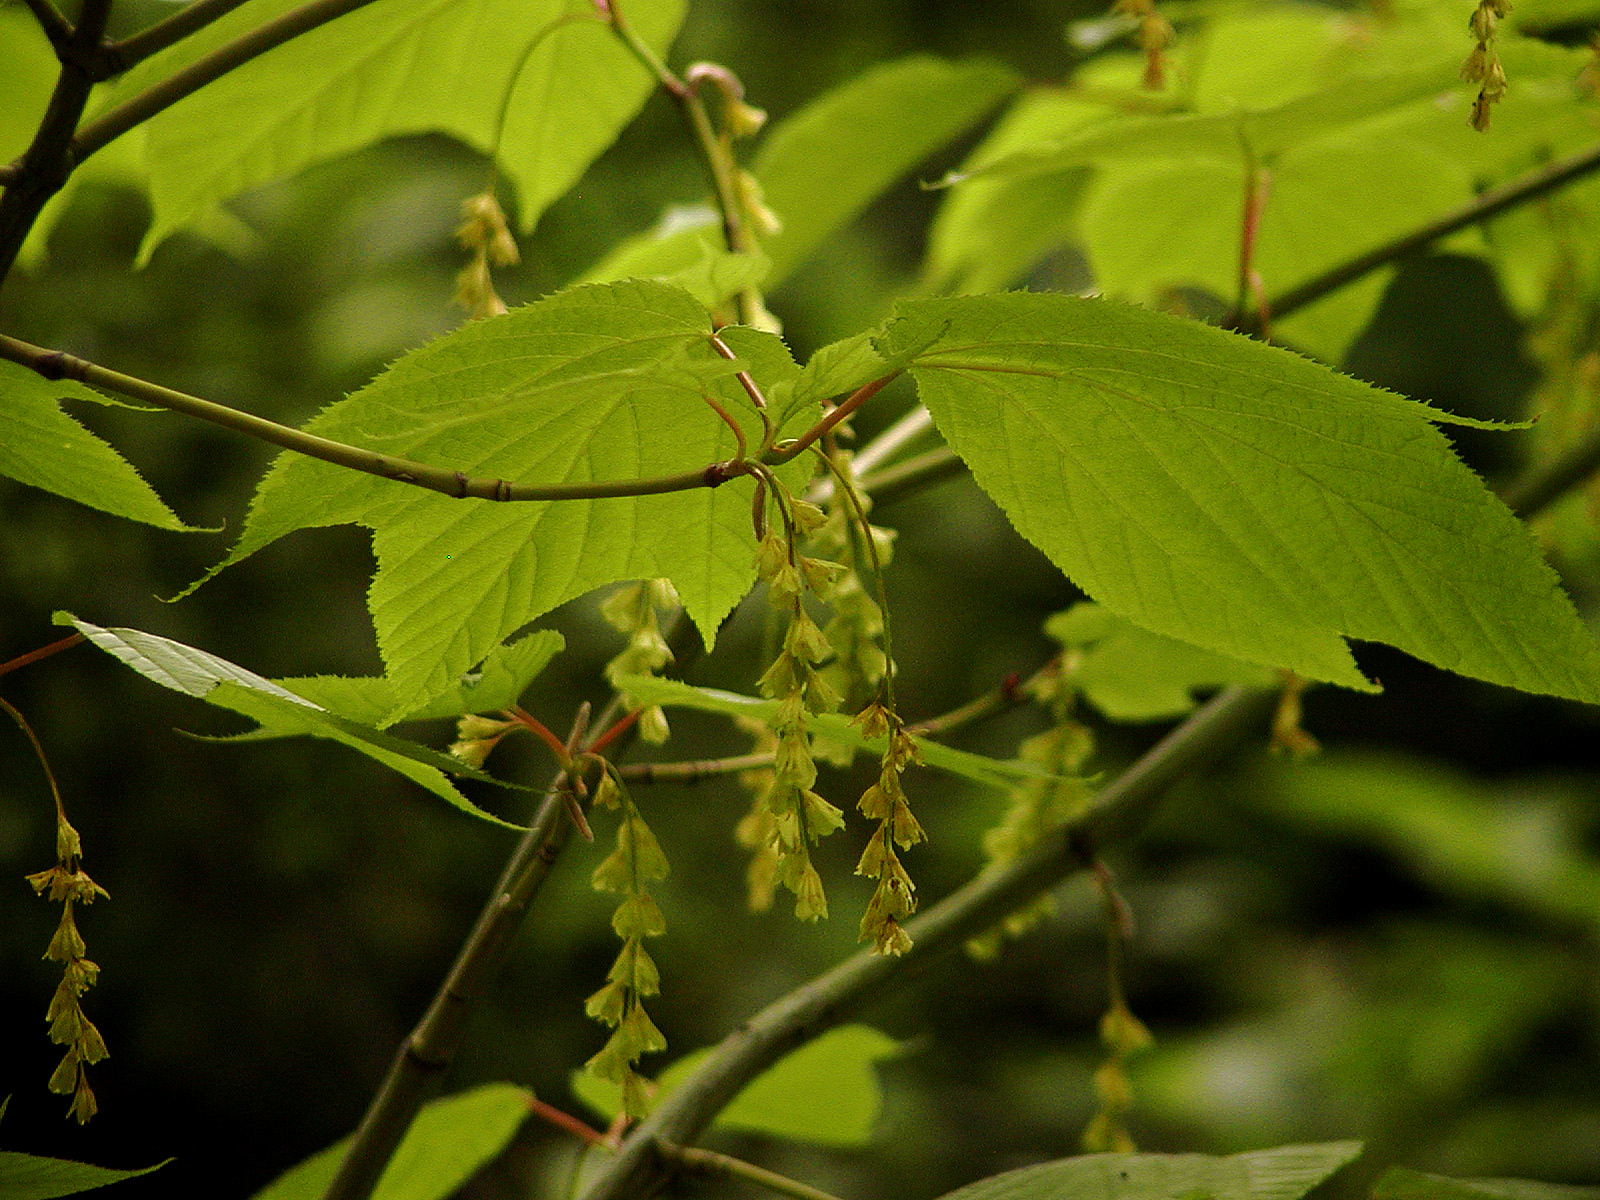 Acer pensylvanicum-Moosewood or Striped Maple